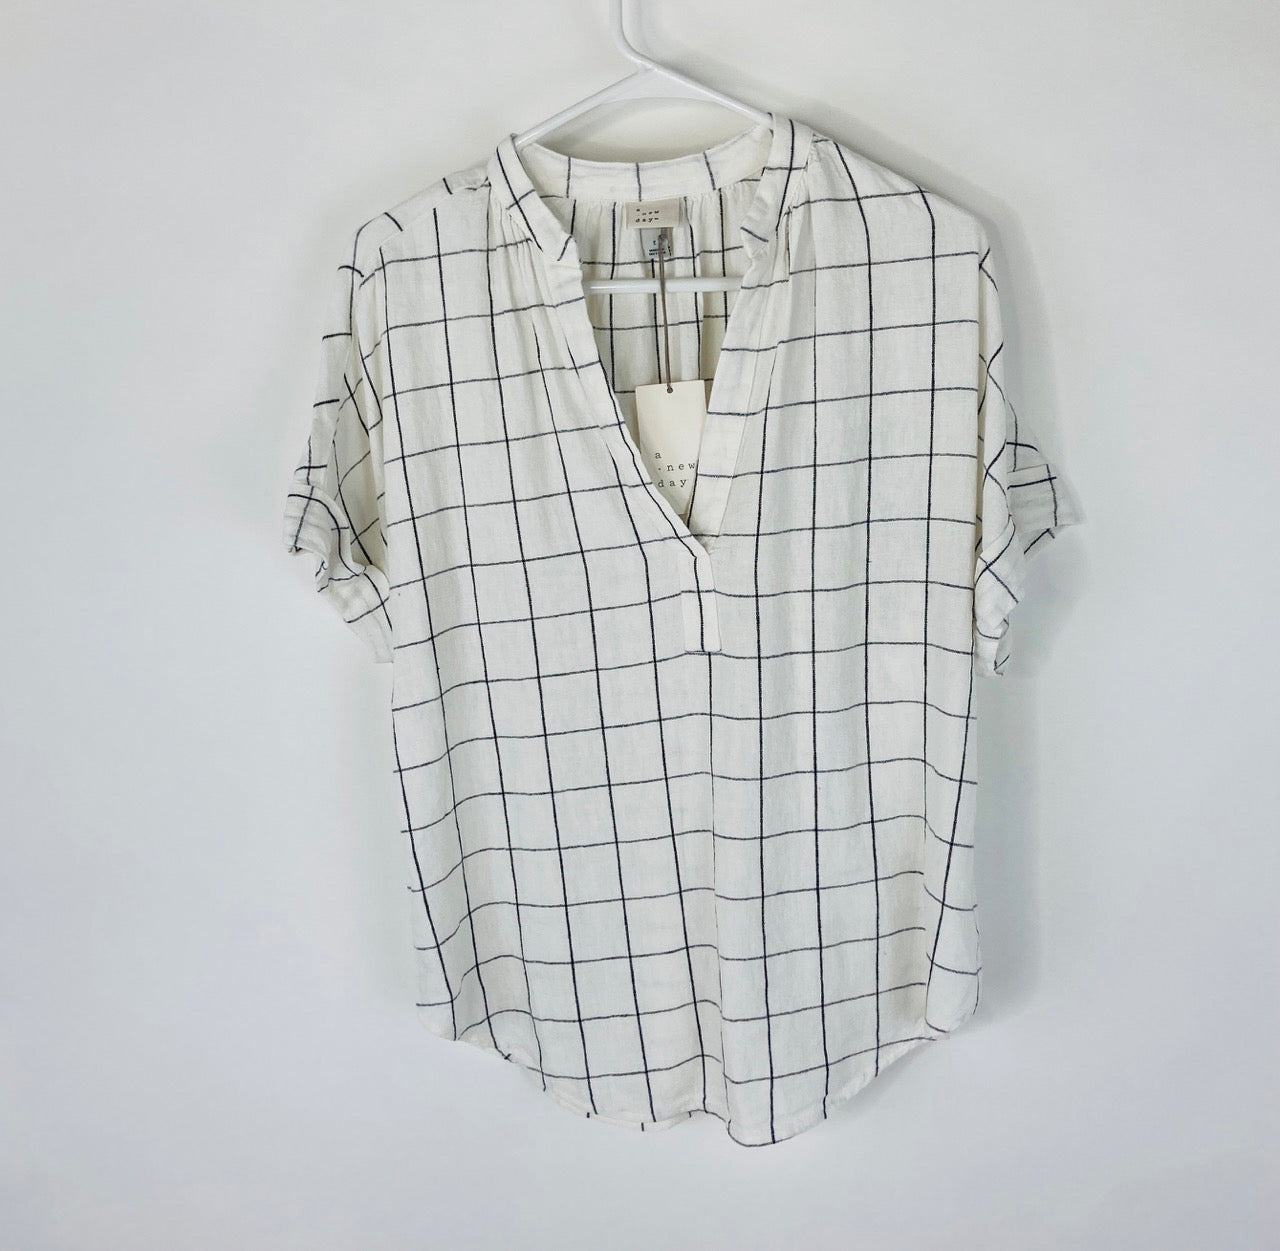 NWT Short Sleeve Black & White Striped Linen Top - Women's S